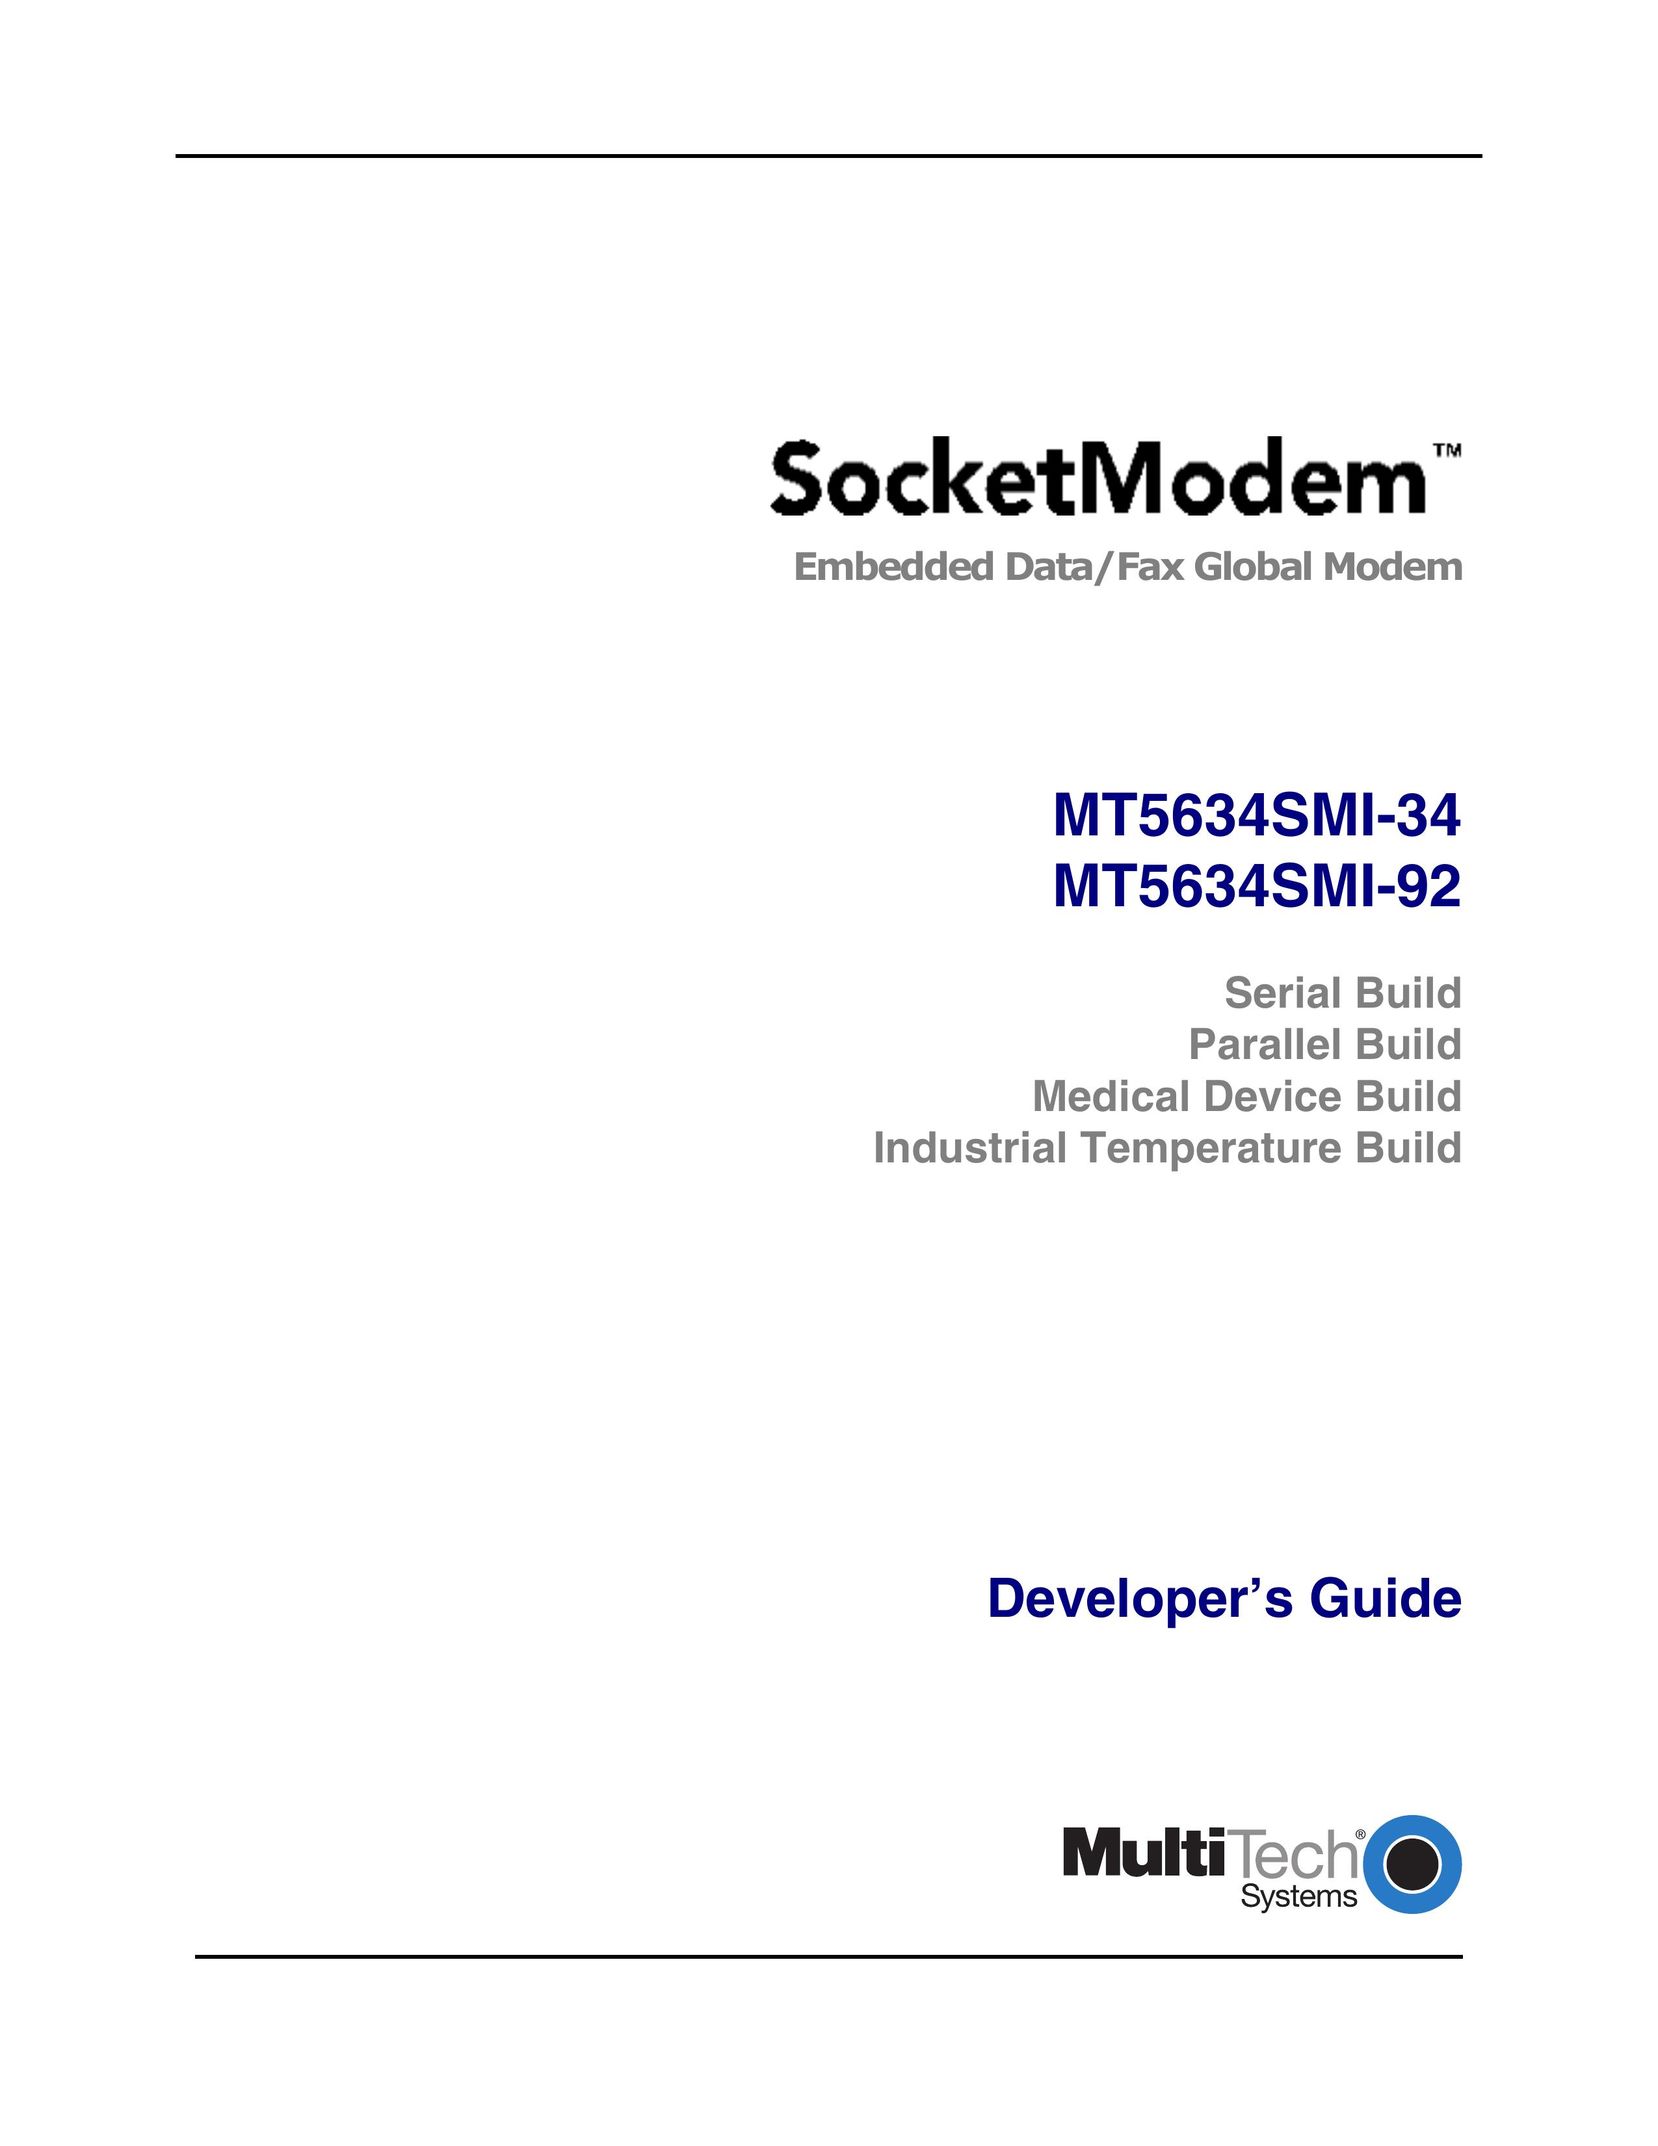 Technics MT5634SMI-34 Modem User Manual